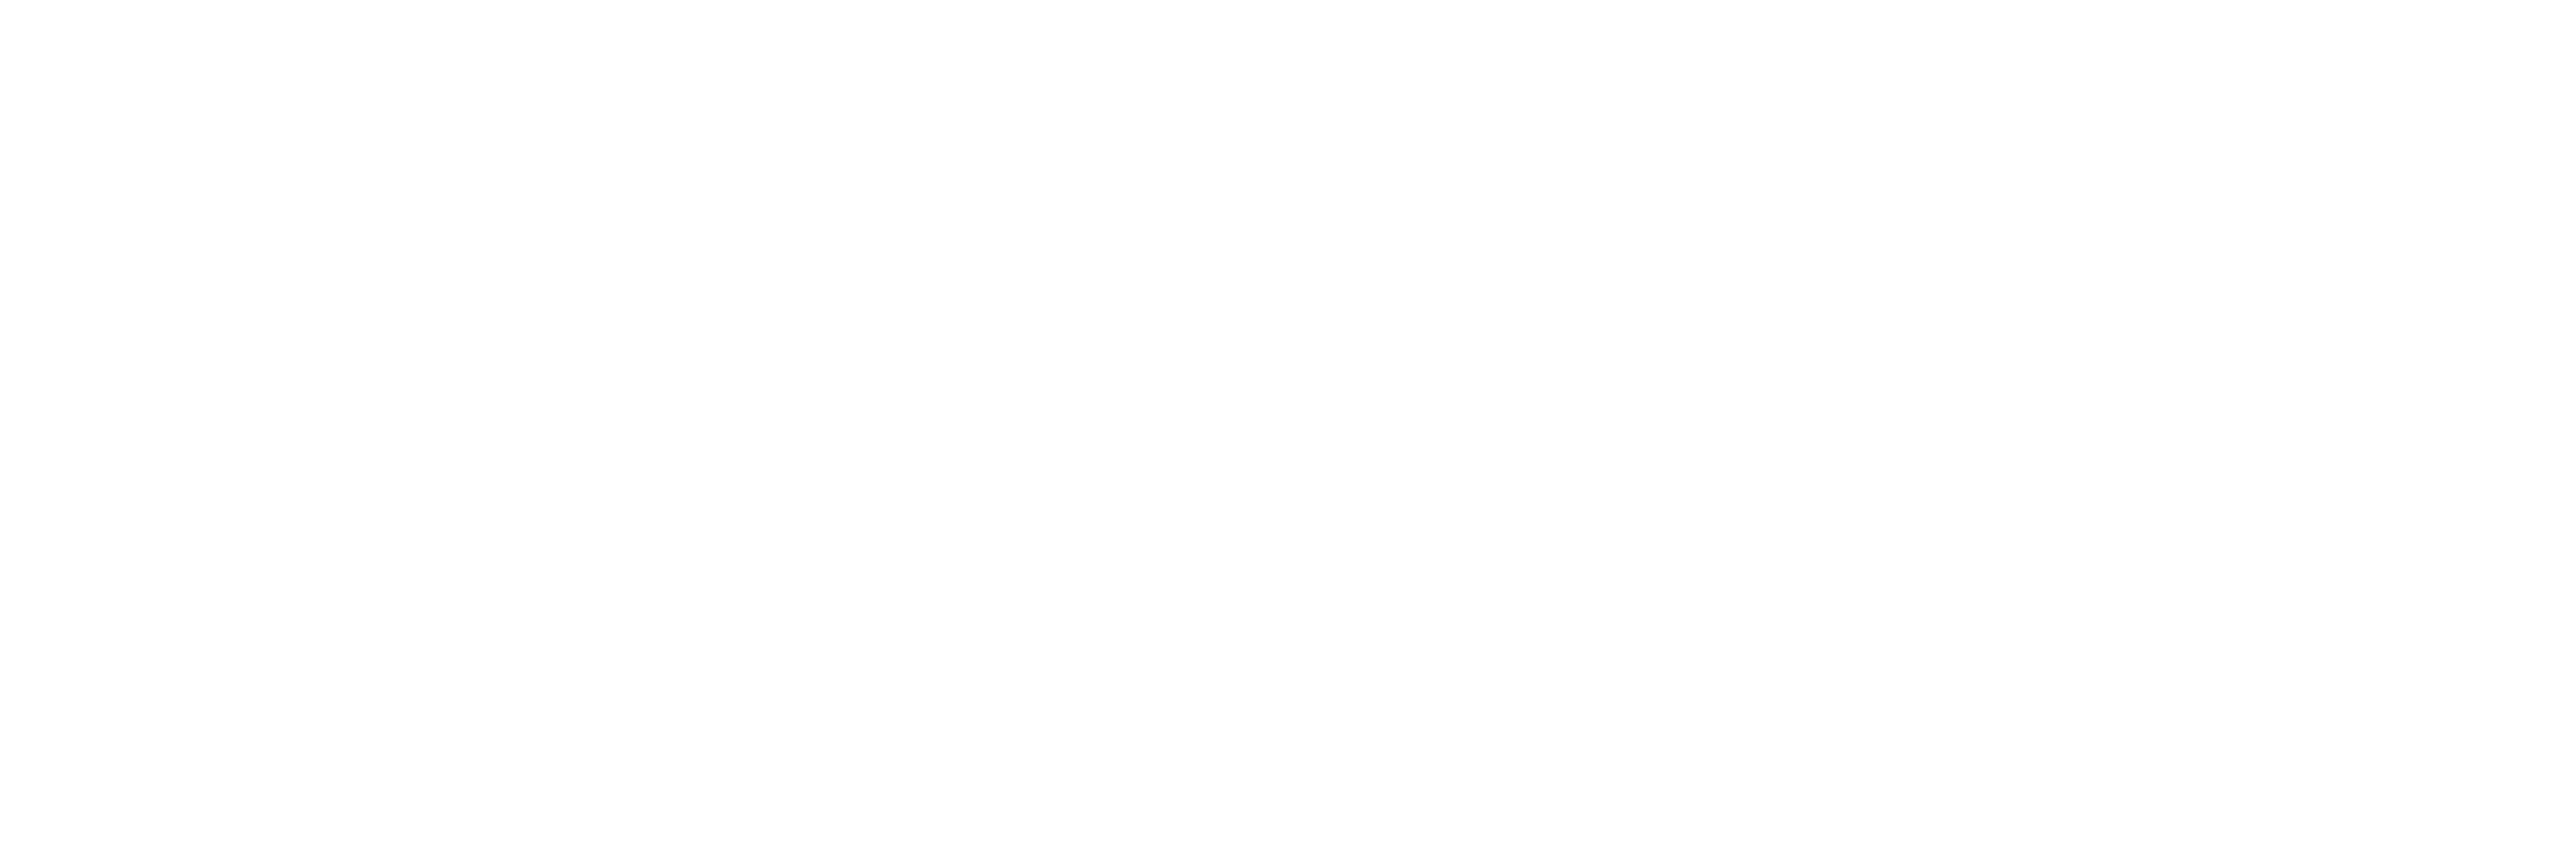 One Last Deal logo